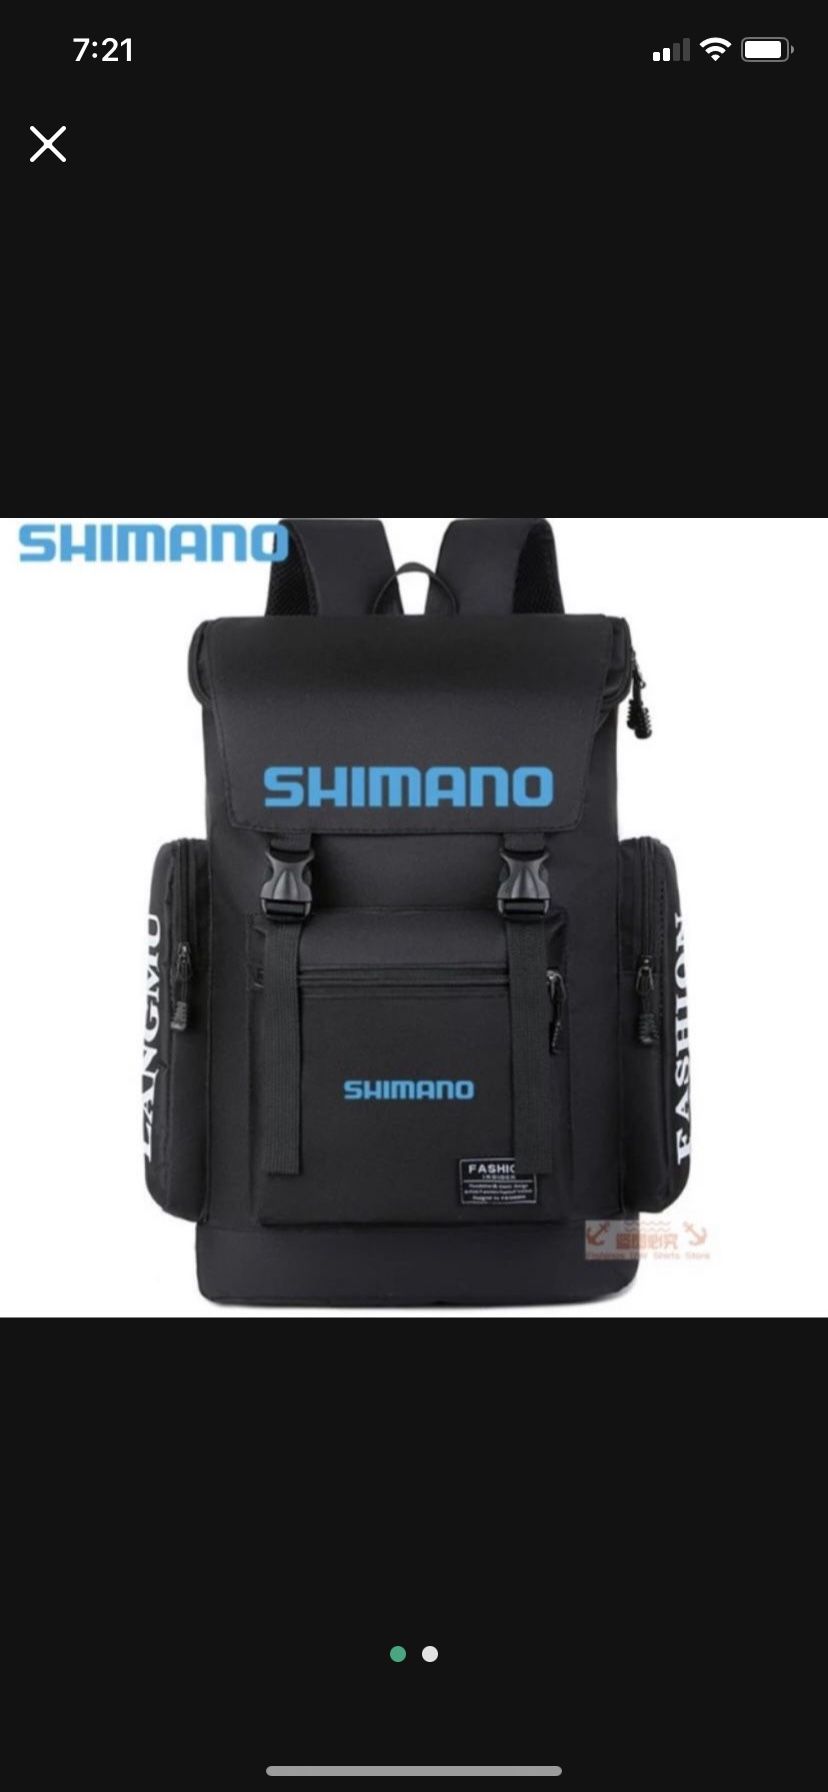 Shimano Outdoor Waterproof Bag for Sale in Miami, FL - OfferUp